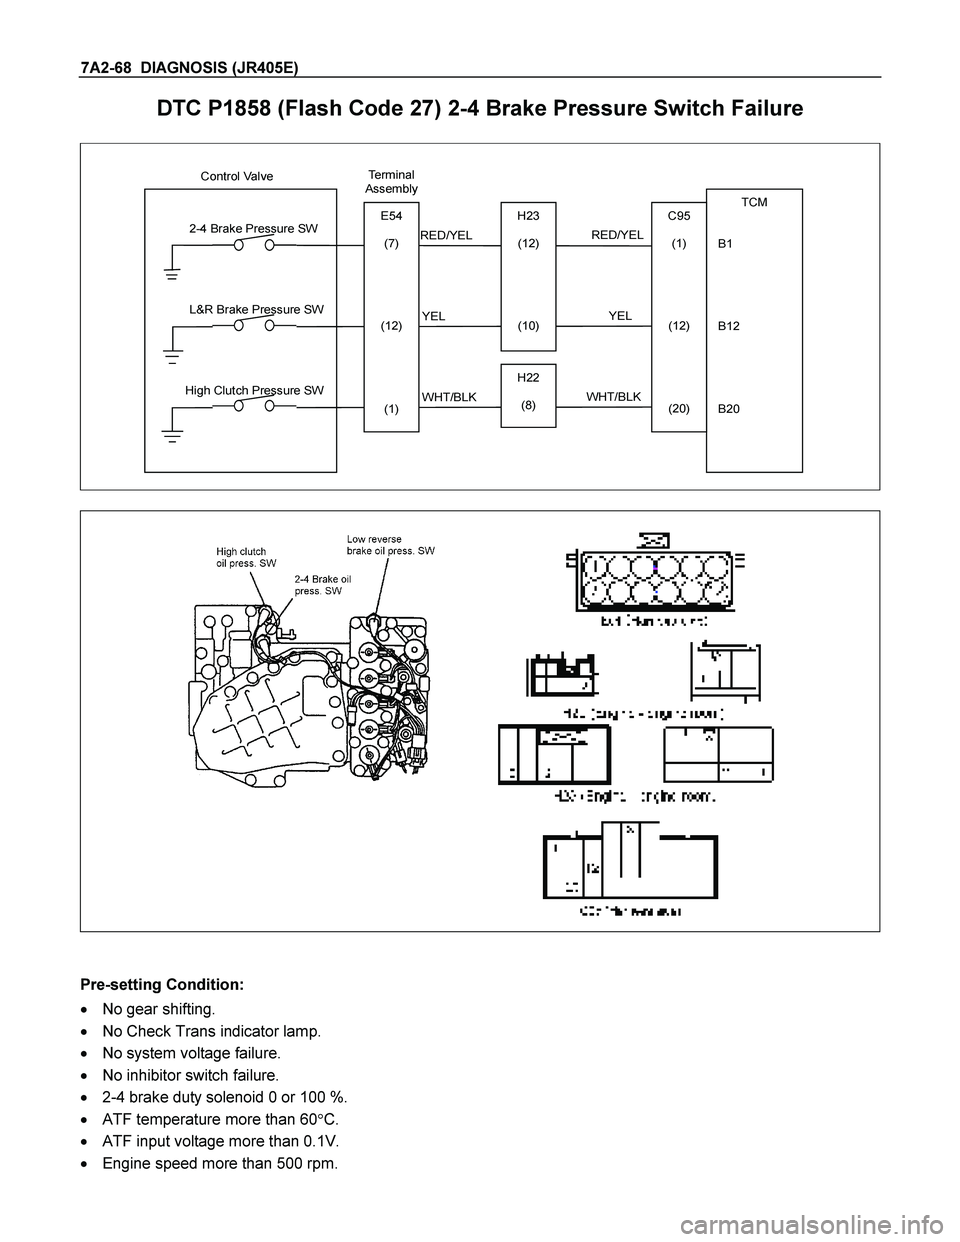 ISUZU TF SERIES 2004  Workshop Manual 7A2-68  DIAGNOSIS (JR405E)  
DTC P1858 (Flash Code 27) 2-4 Brake Pressure Switch Failure 
  
 
 
       Control Valve
               
                                        TCM 
B1 
B12 
B20 
RED/YEL